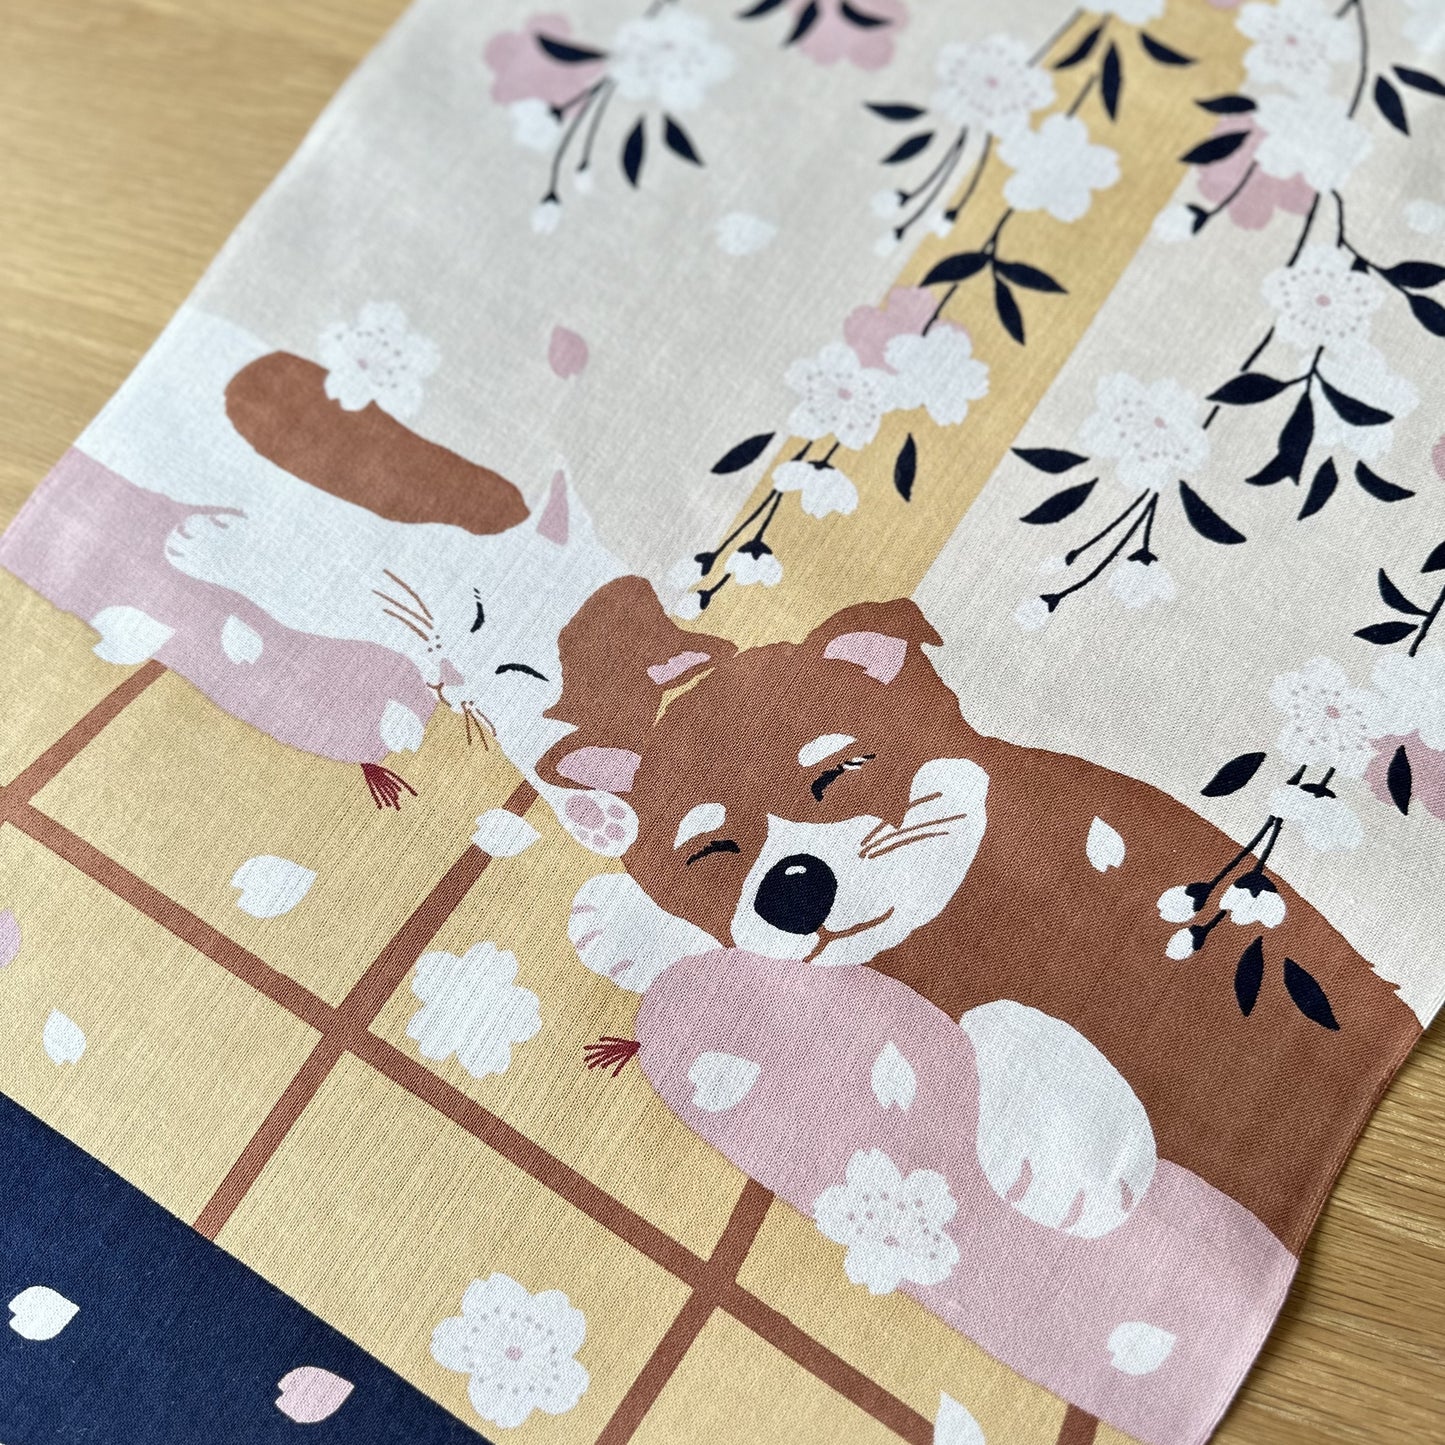 Tenugui Art, Shiba Dog & Cat with Cherry Blossoms, 34cm x 90cm (13.4” x 35.4”)